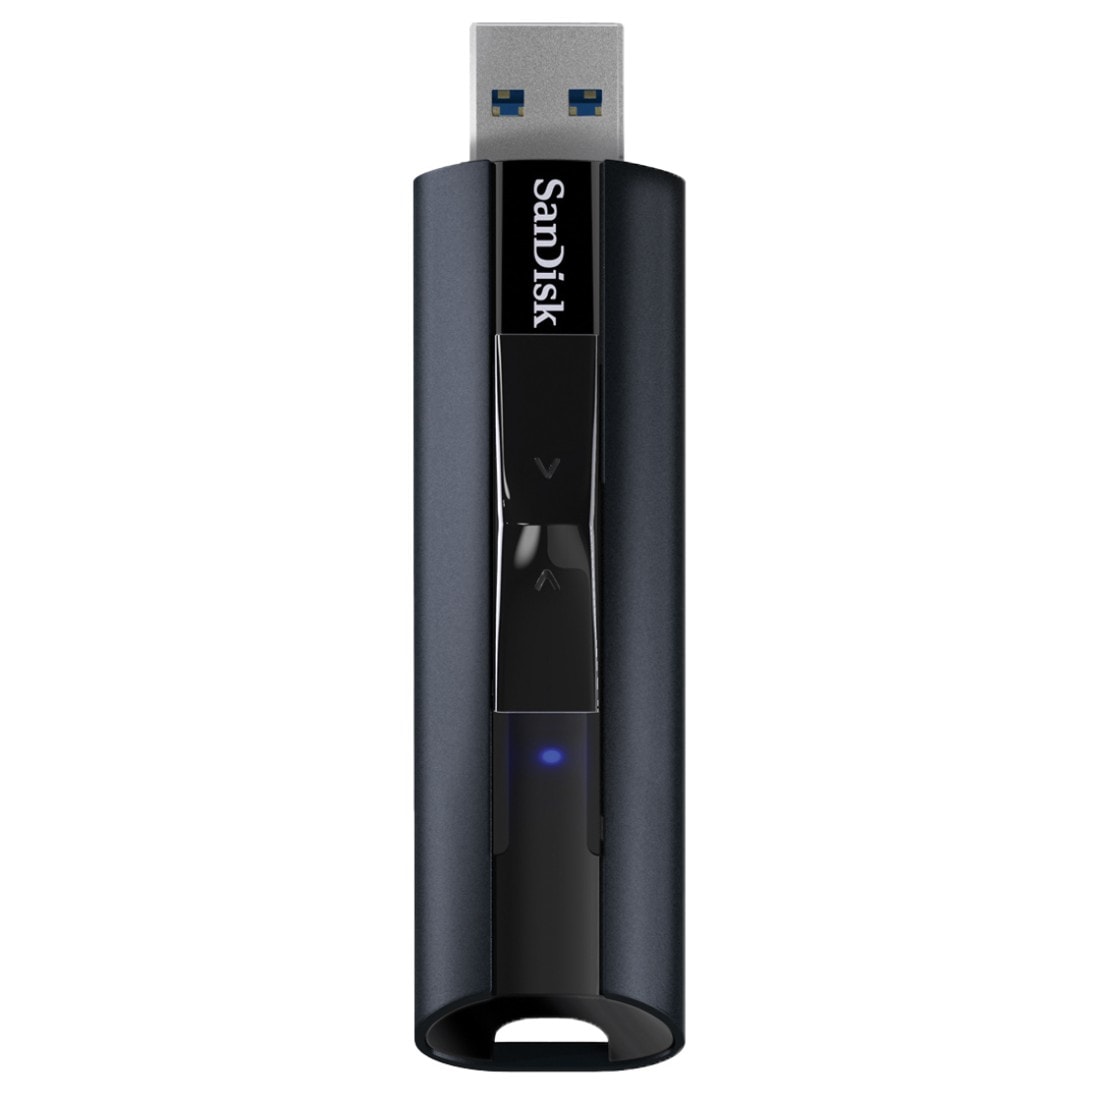 Sandisk USB-Stick »Cruzer Extreme Pro 512GB, USB 3.2, 420MB/s«, (Lesegeschwindigkeit 420 MB/s)